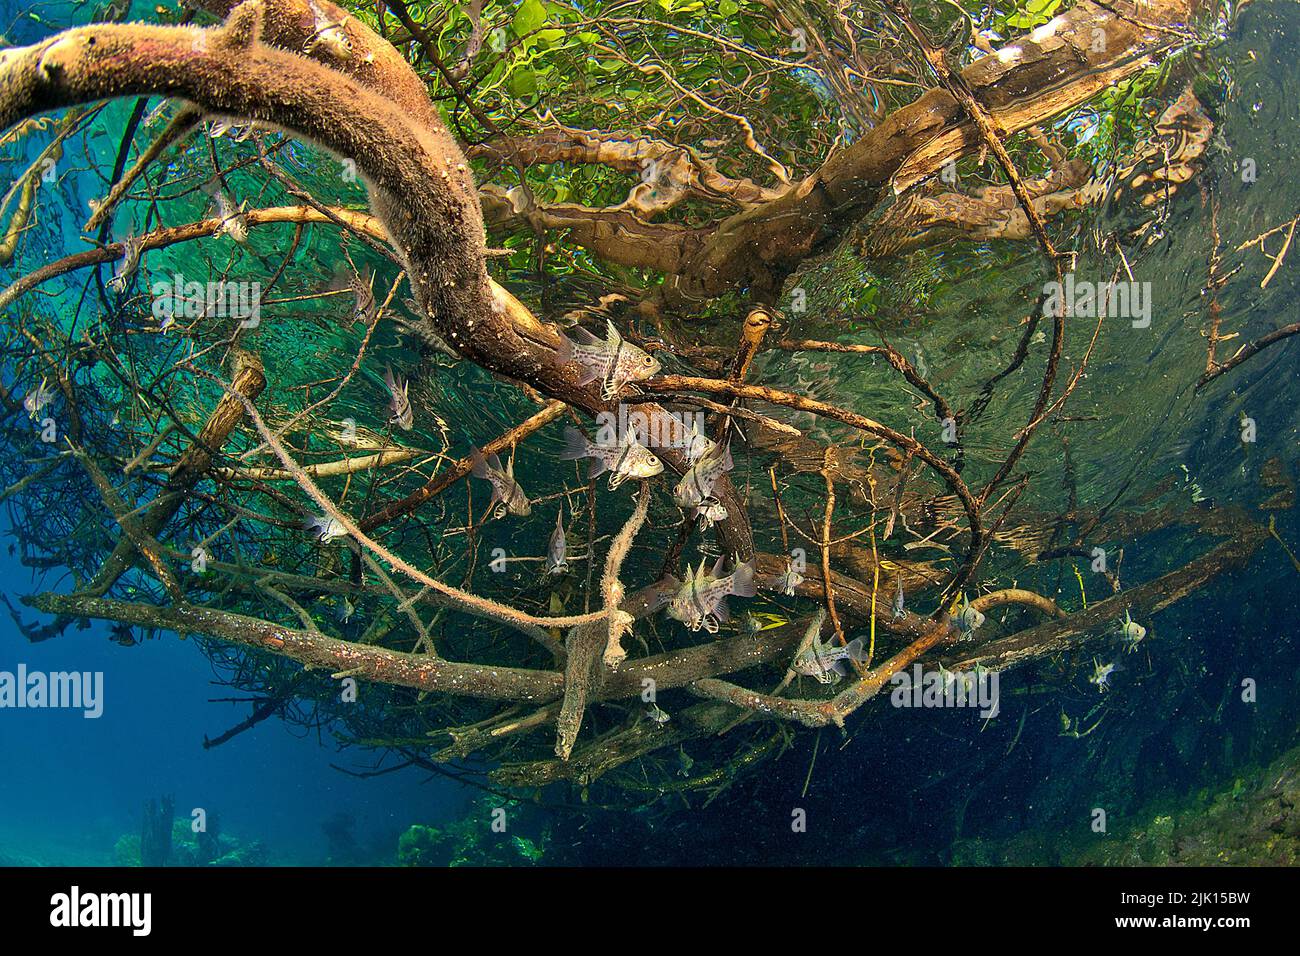 Nursery, young Orbic Cardinalfish (Sphaeramia orbicularis) hiding between Red Mangrove roots (Rhizophora mangle), Russel islands, Solomon islands Stock Photo